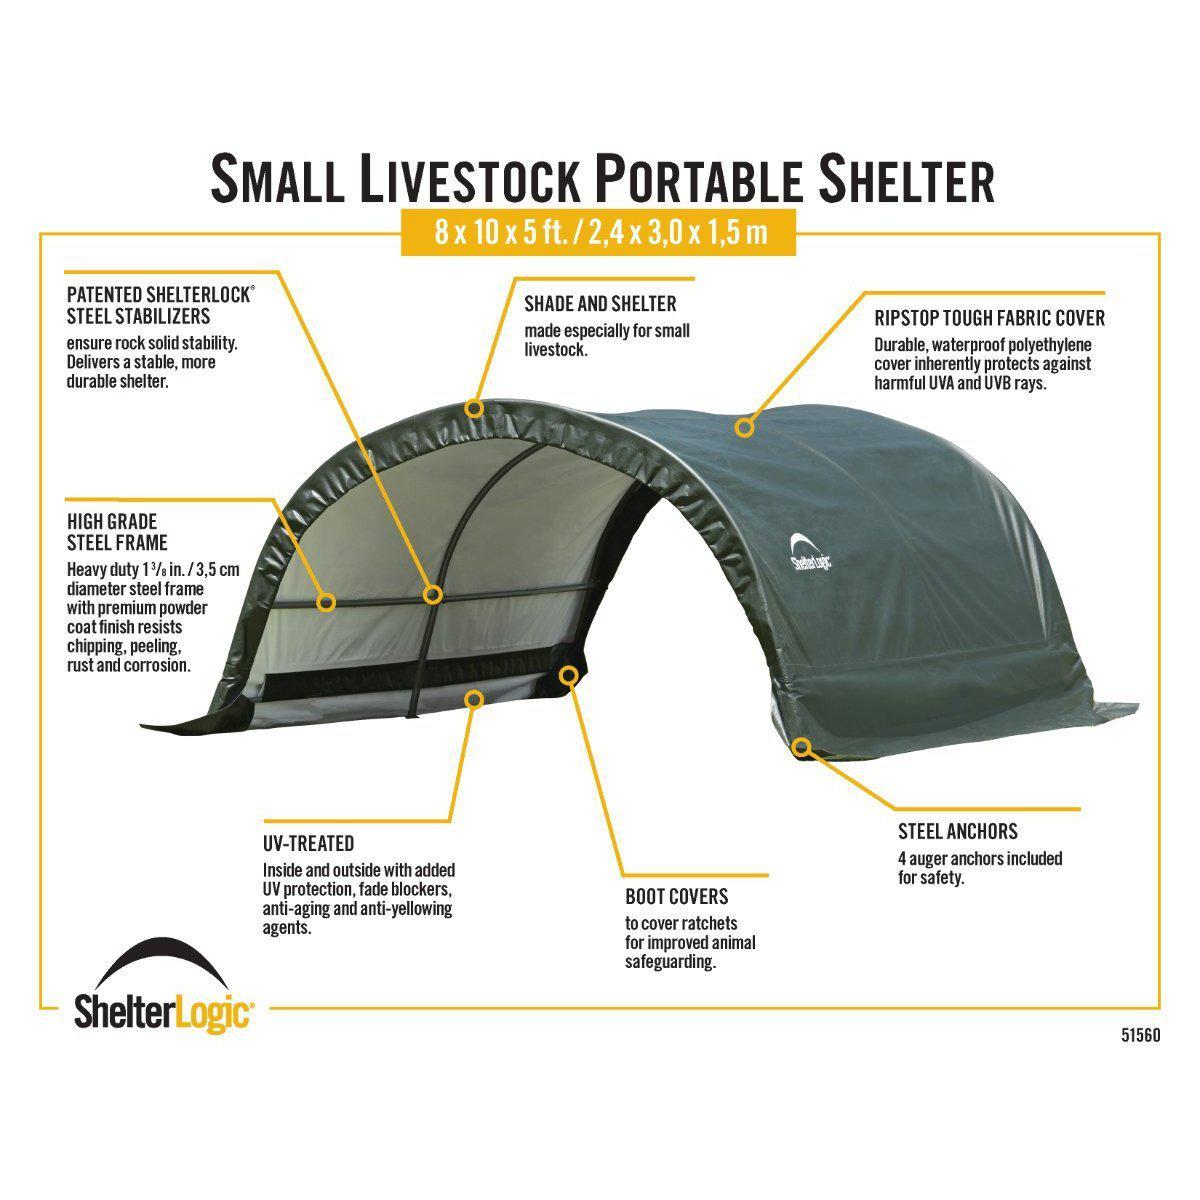 Small Livestock Portable Shelter, 8 x 10 x 5 ft. Round - Delightful Yard